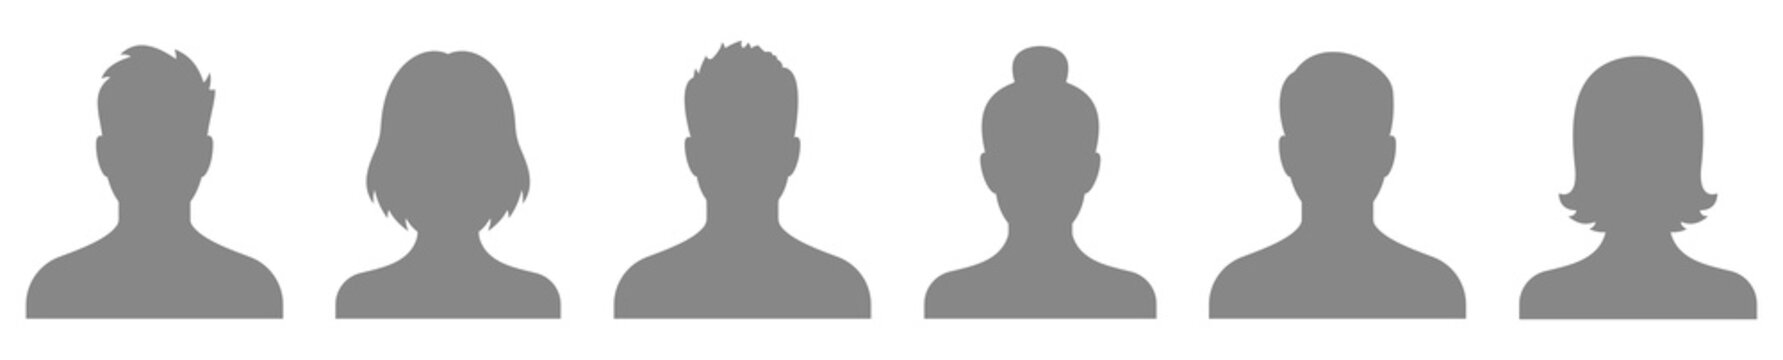 Avatar set. Profile icon set. People icon. Man head. Woman head. Male and female avatars. Vector illustration